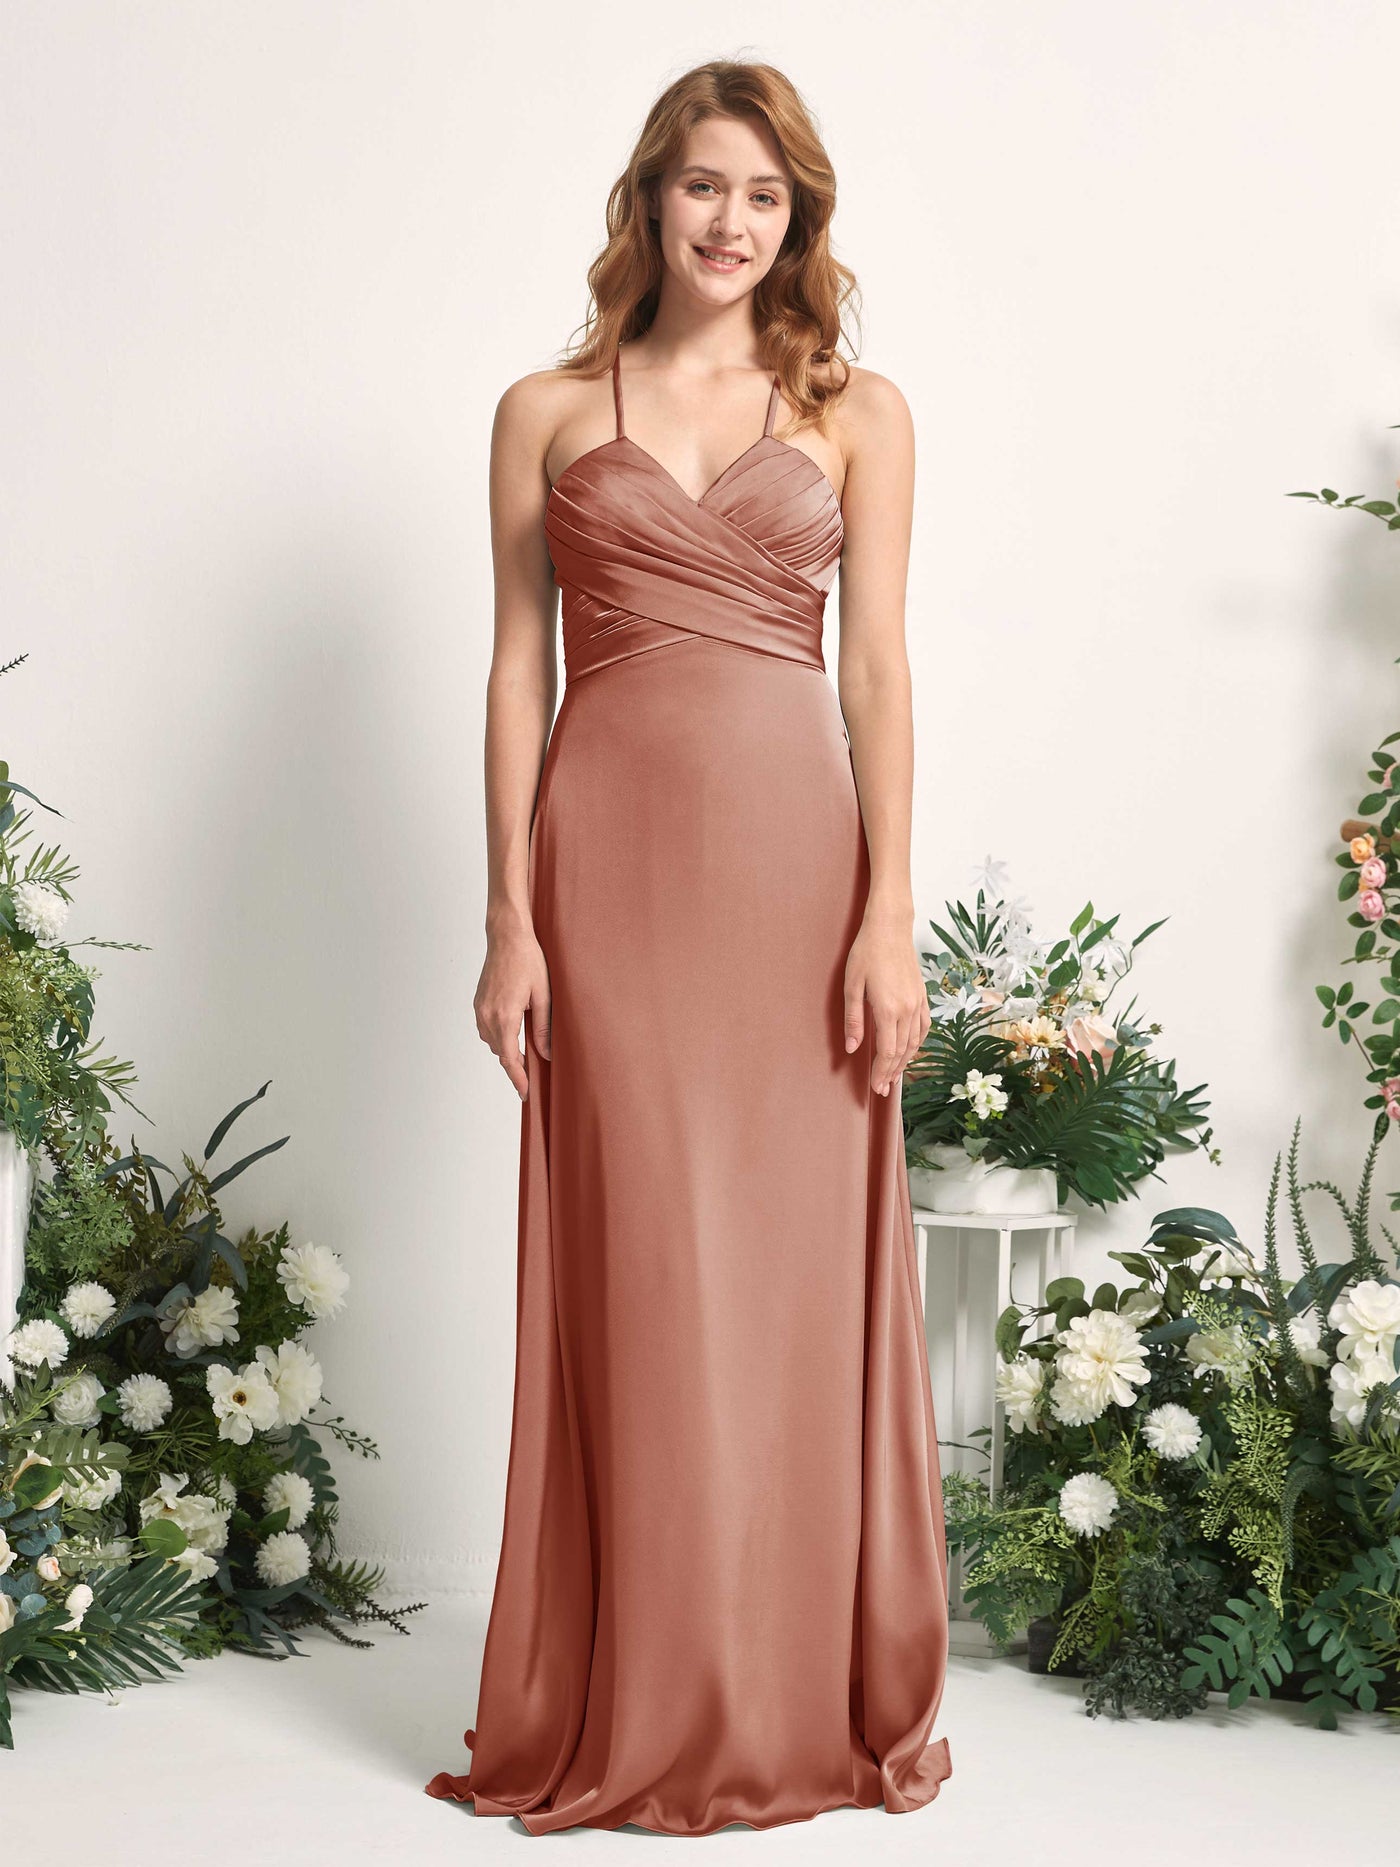 Raw Sienna Bridesmaid Dresses Bridesmaid Dress A-line Satin Spaghetti-straps Full Length Sleeveless Wedding Party Dress (80225715)#color_raw-sienna